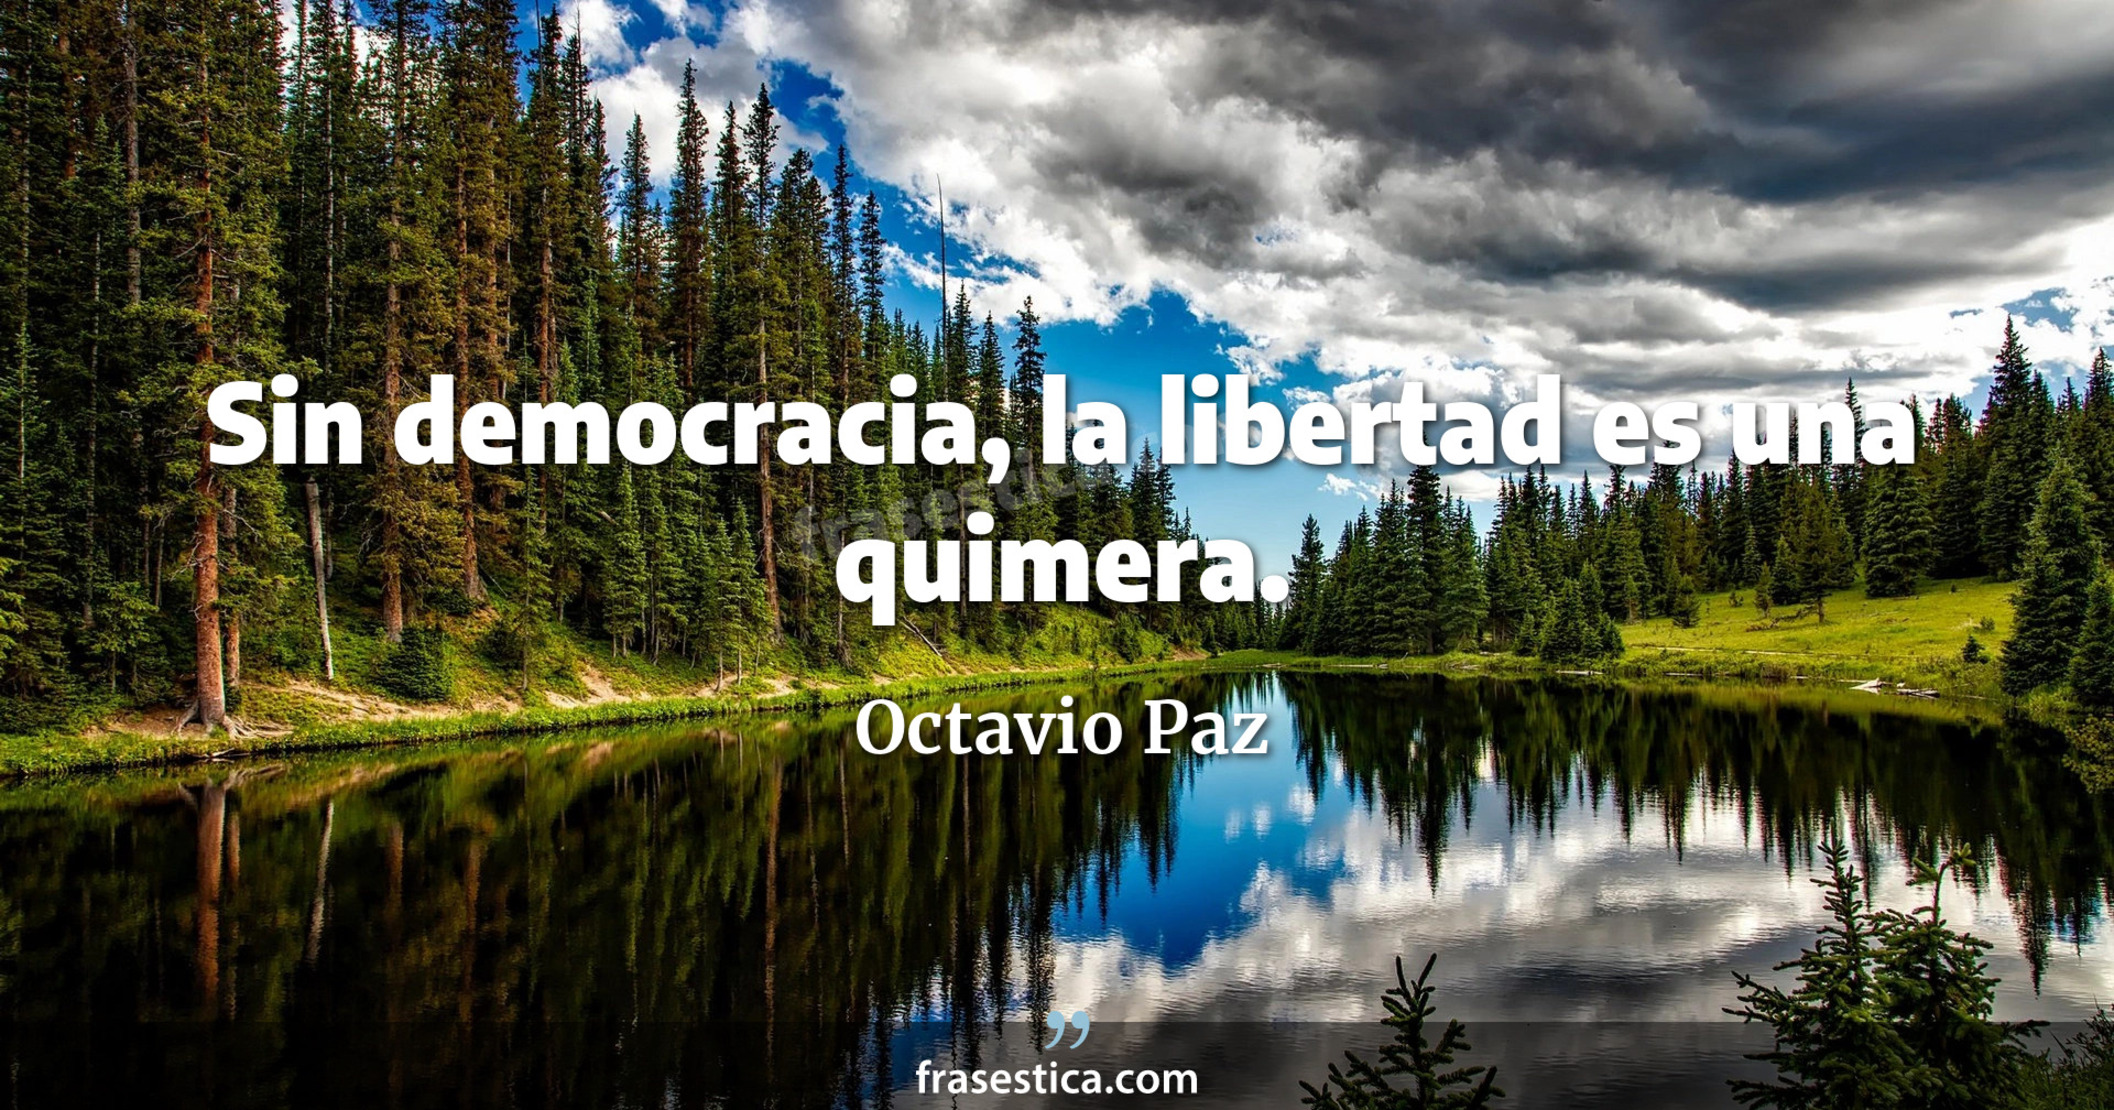 Sin democracia, la libertad es una quimera. - Octavio Paz